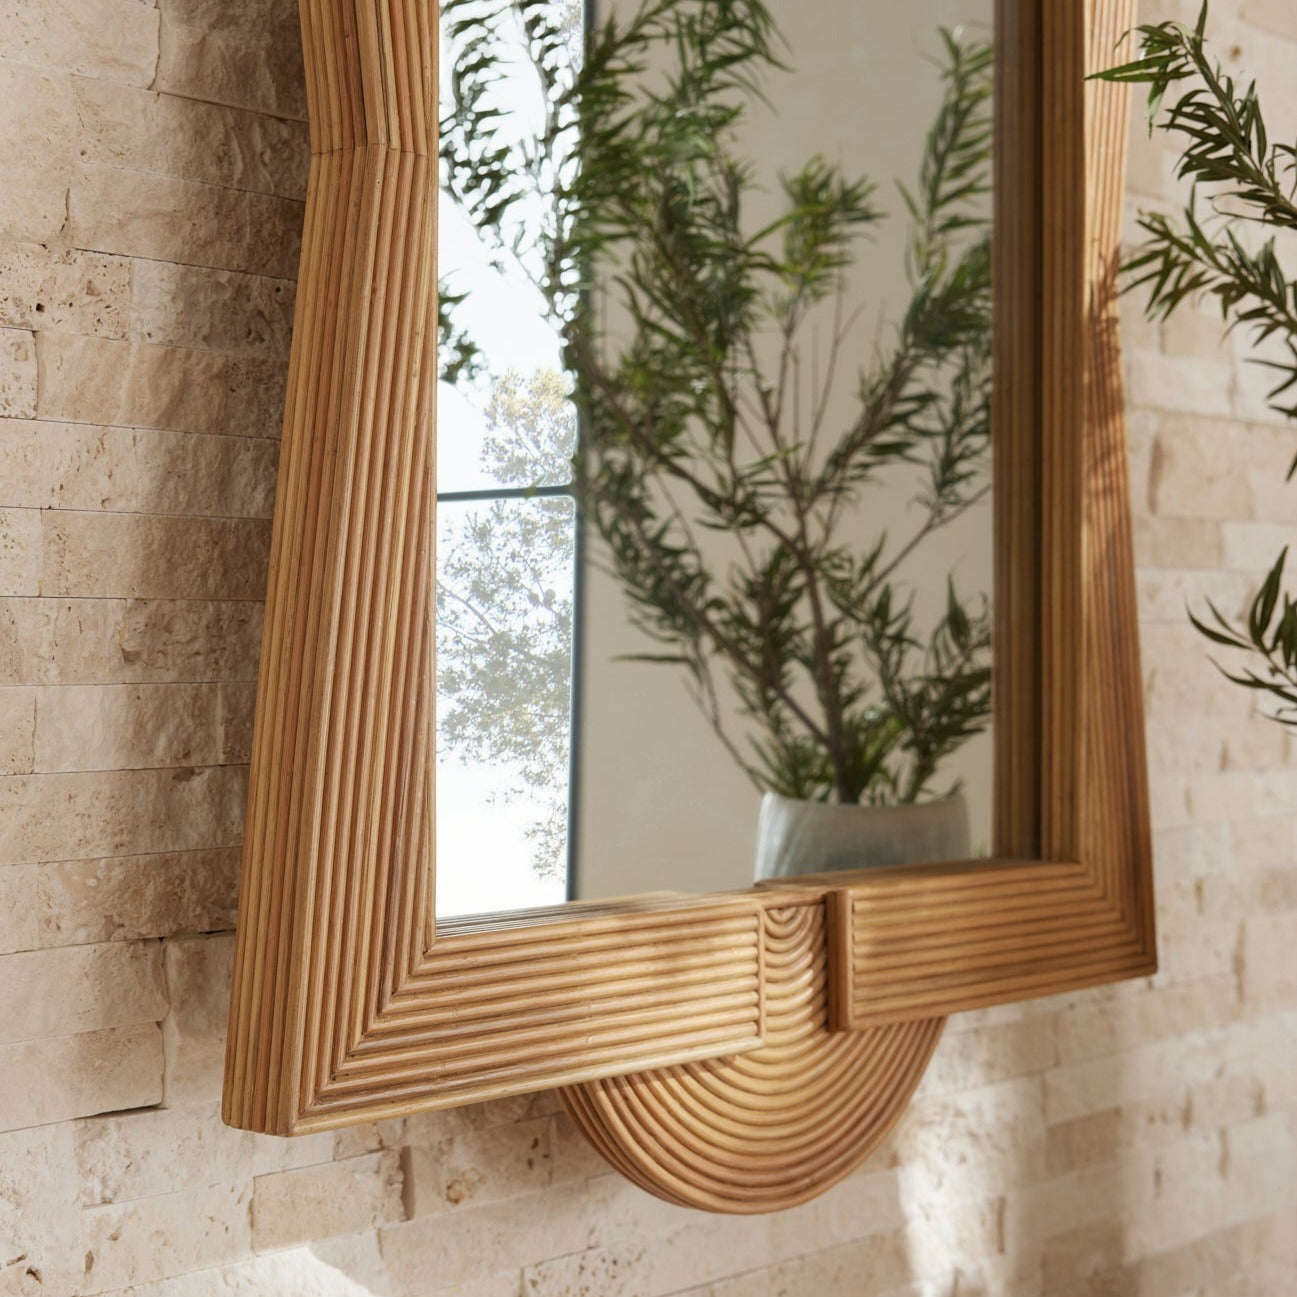 Cypress Mirror